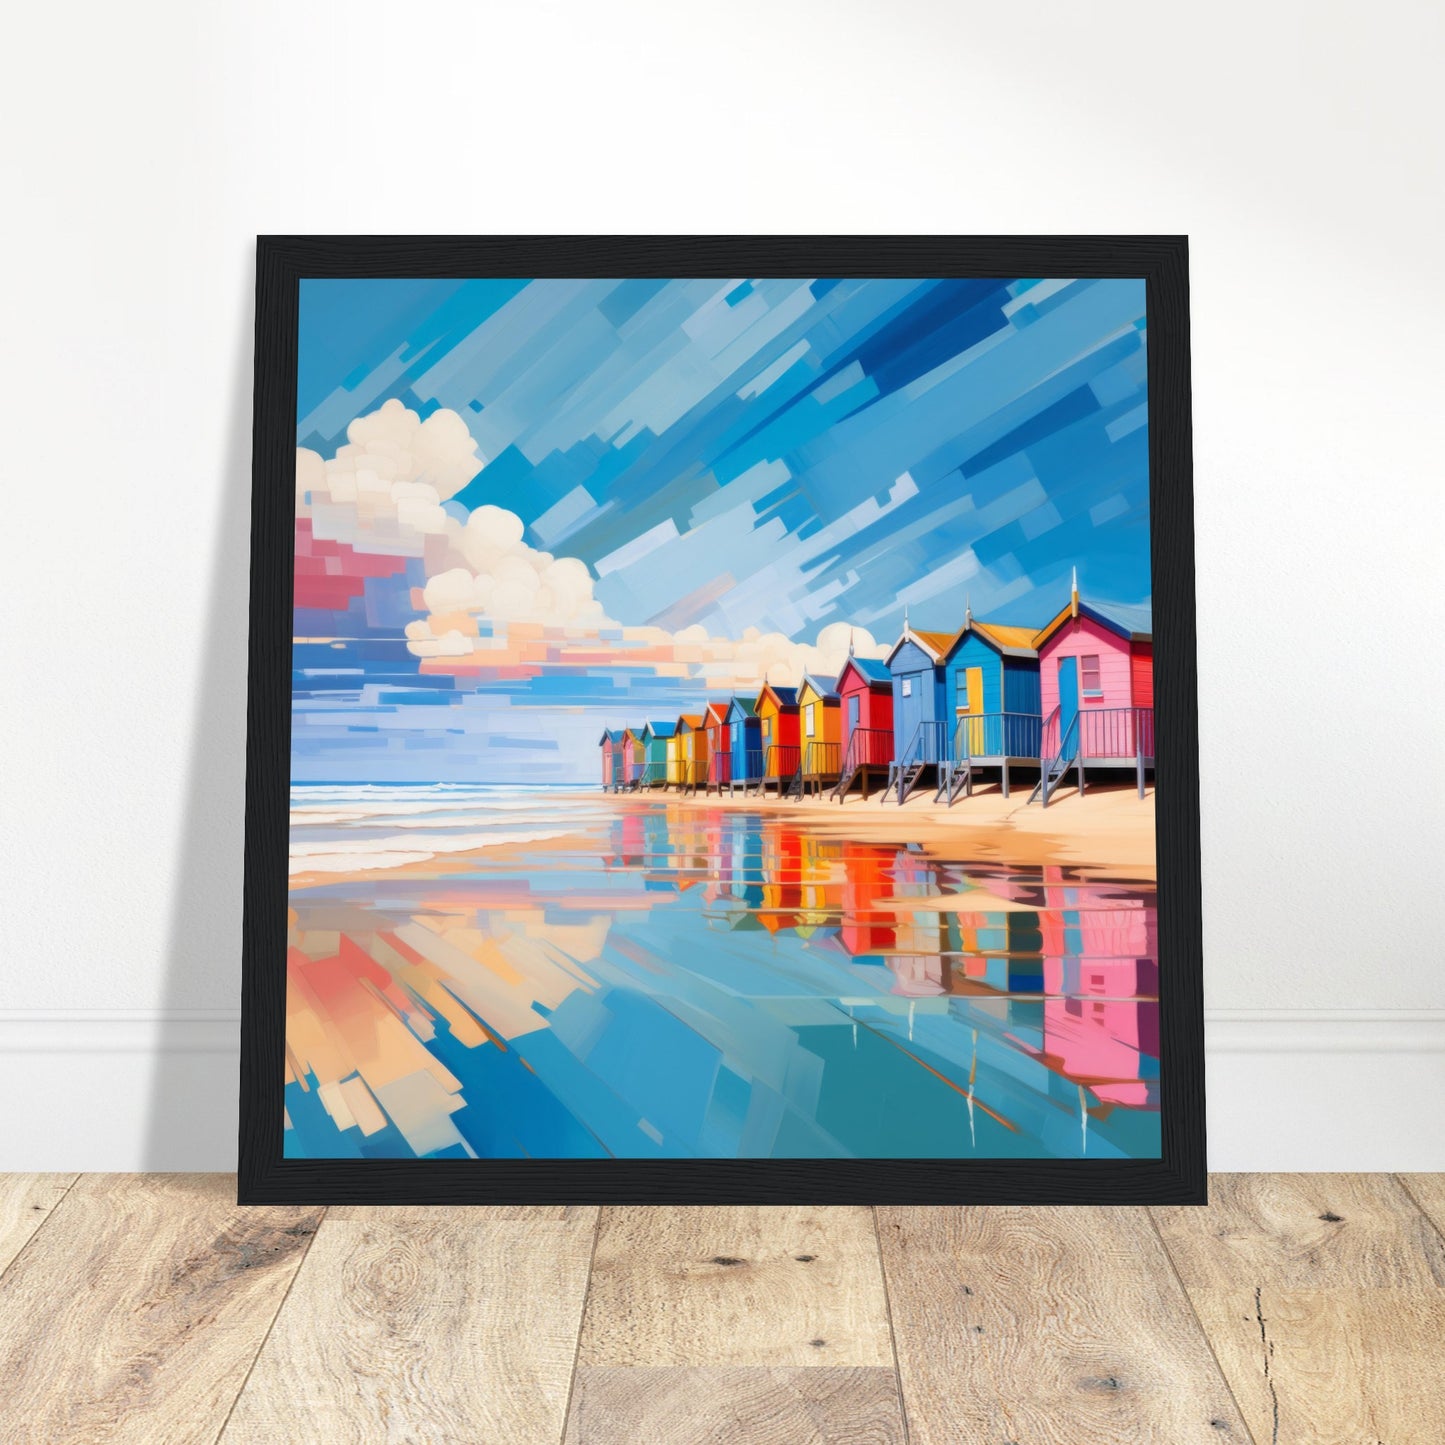 Vibrant Beach Huts Beach Art - Print Room Ltd White frame 30x30 cm / 12x12"